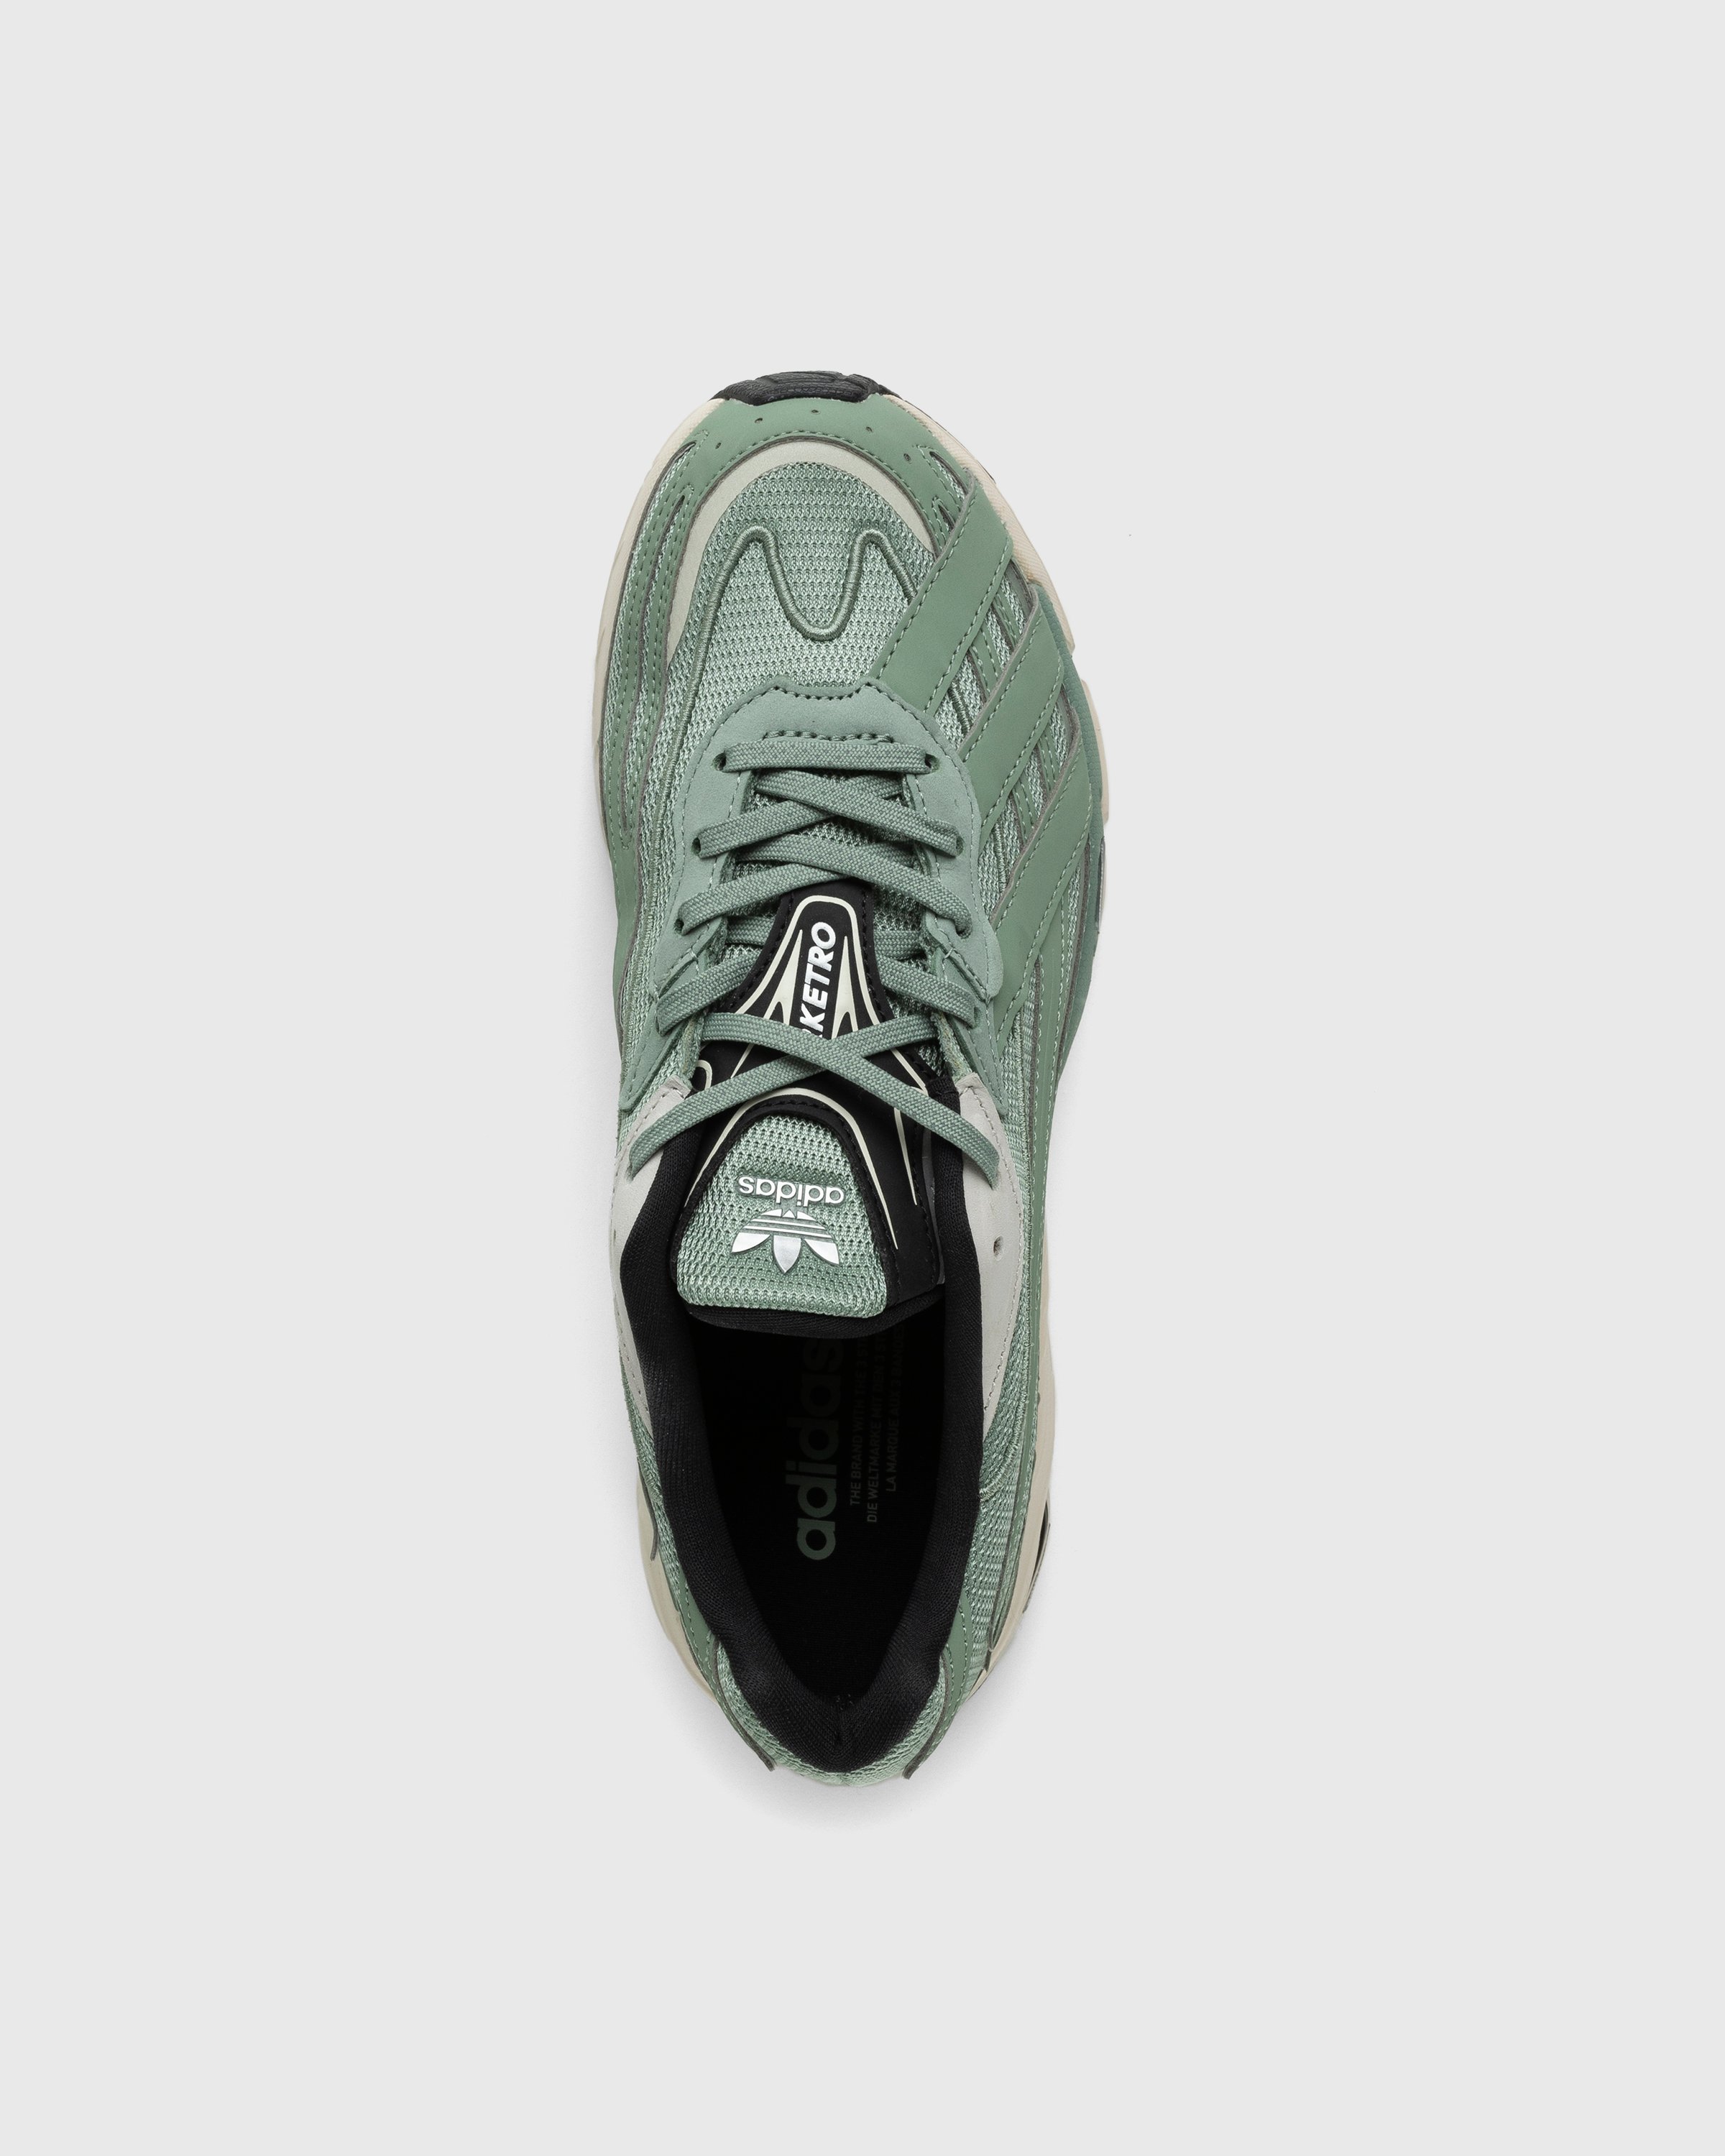 Adidas - Orketro Green/Black/Aluminum - Footwear - Green - Image 5